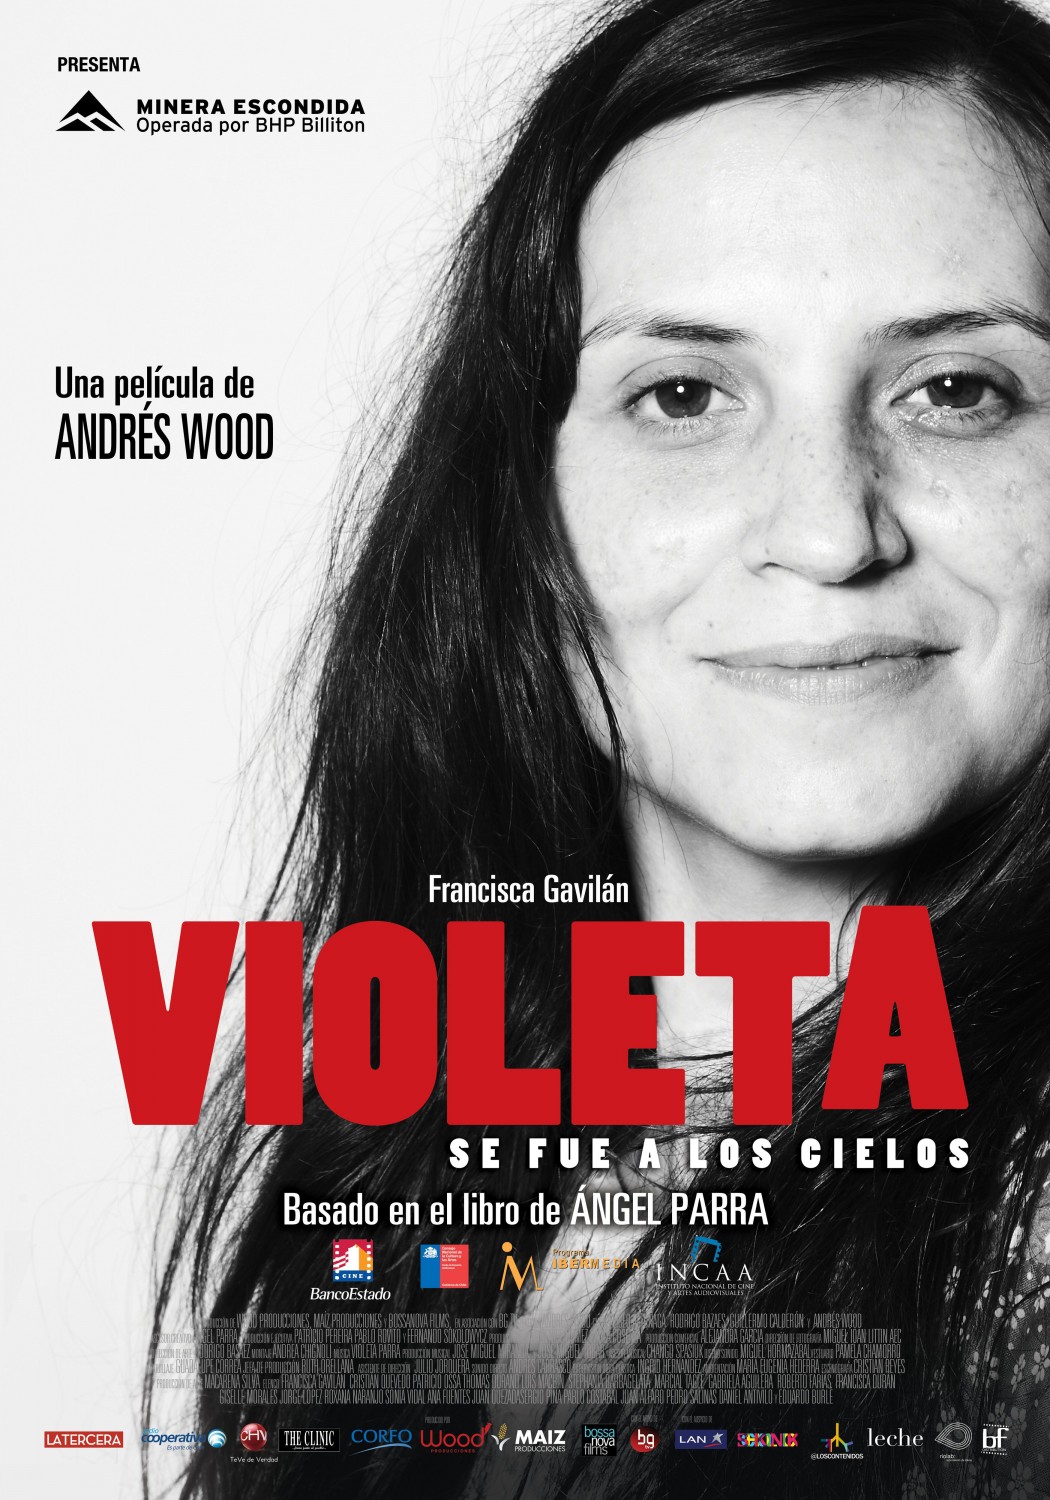 Extra Large Movie Poster Image for Violeta se fue a los cielos (#1 of 2)